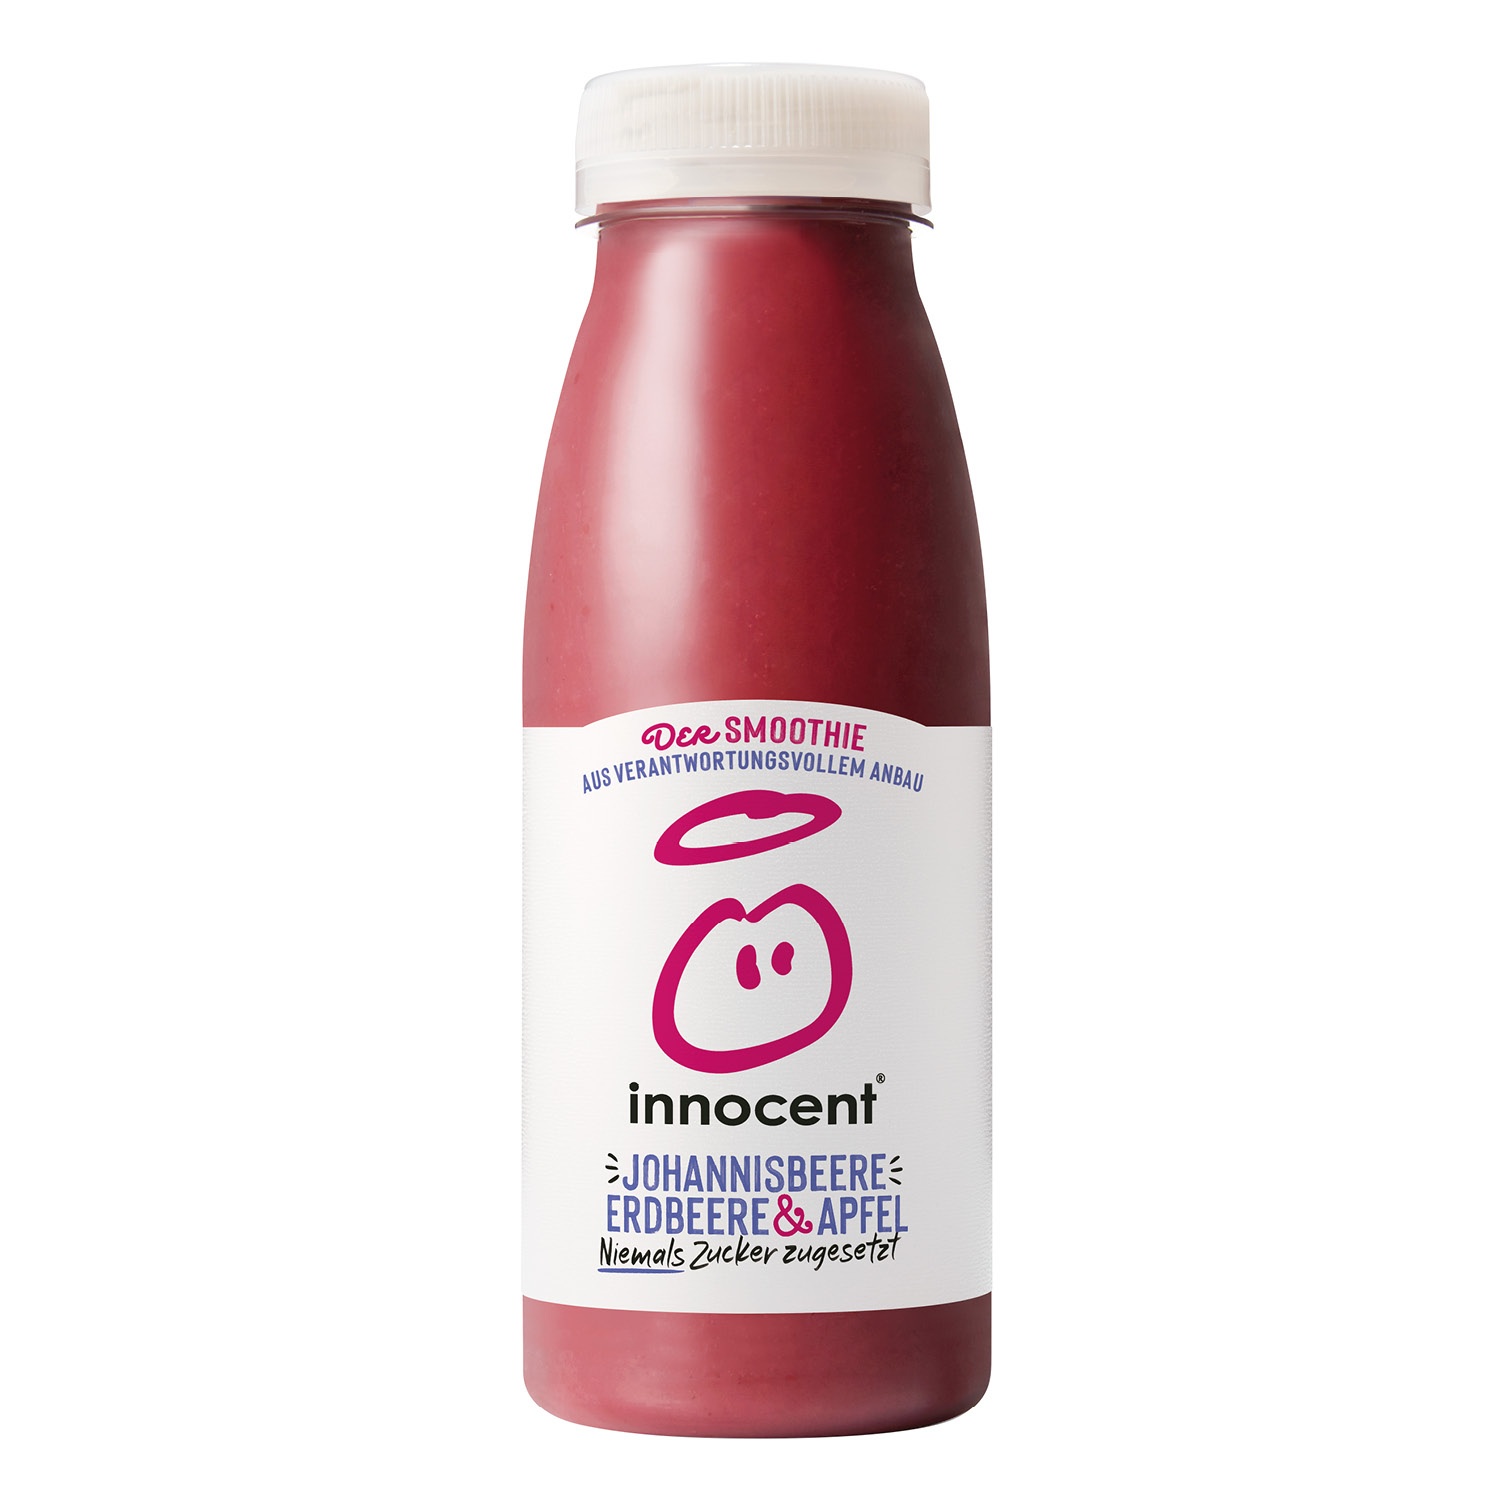 INNOCENT® Smoothie 250 ml